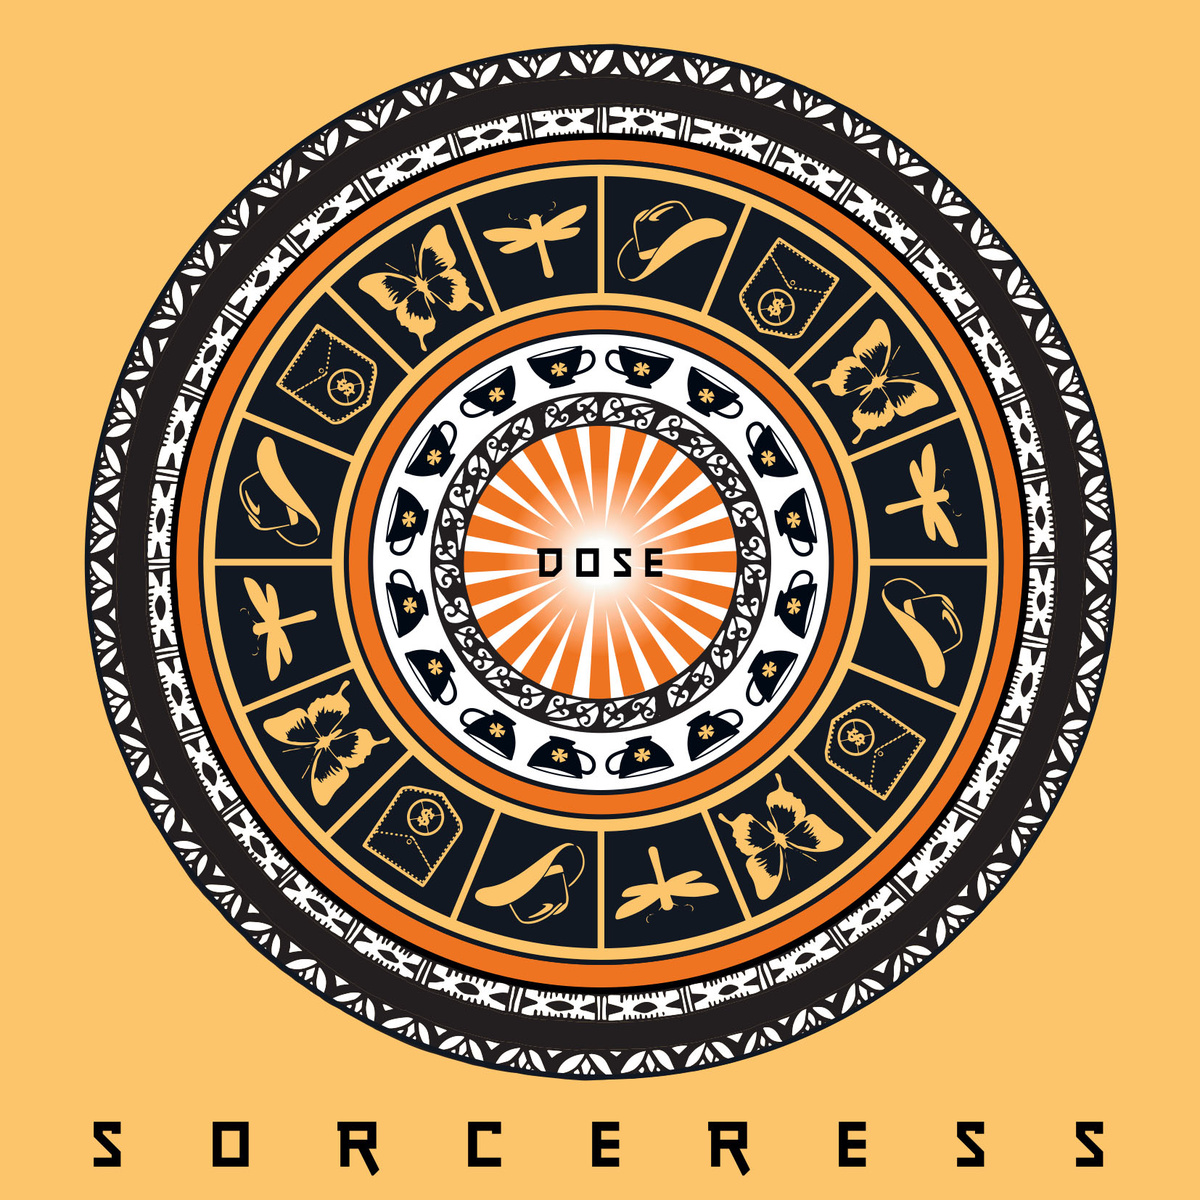 Sorceress "Dose" Release | @sorceressmusic